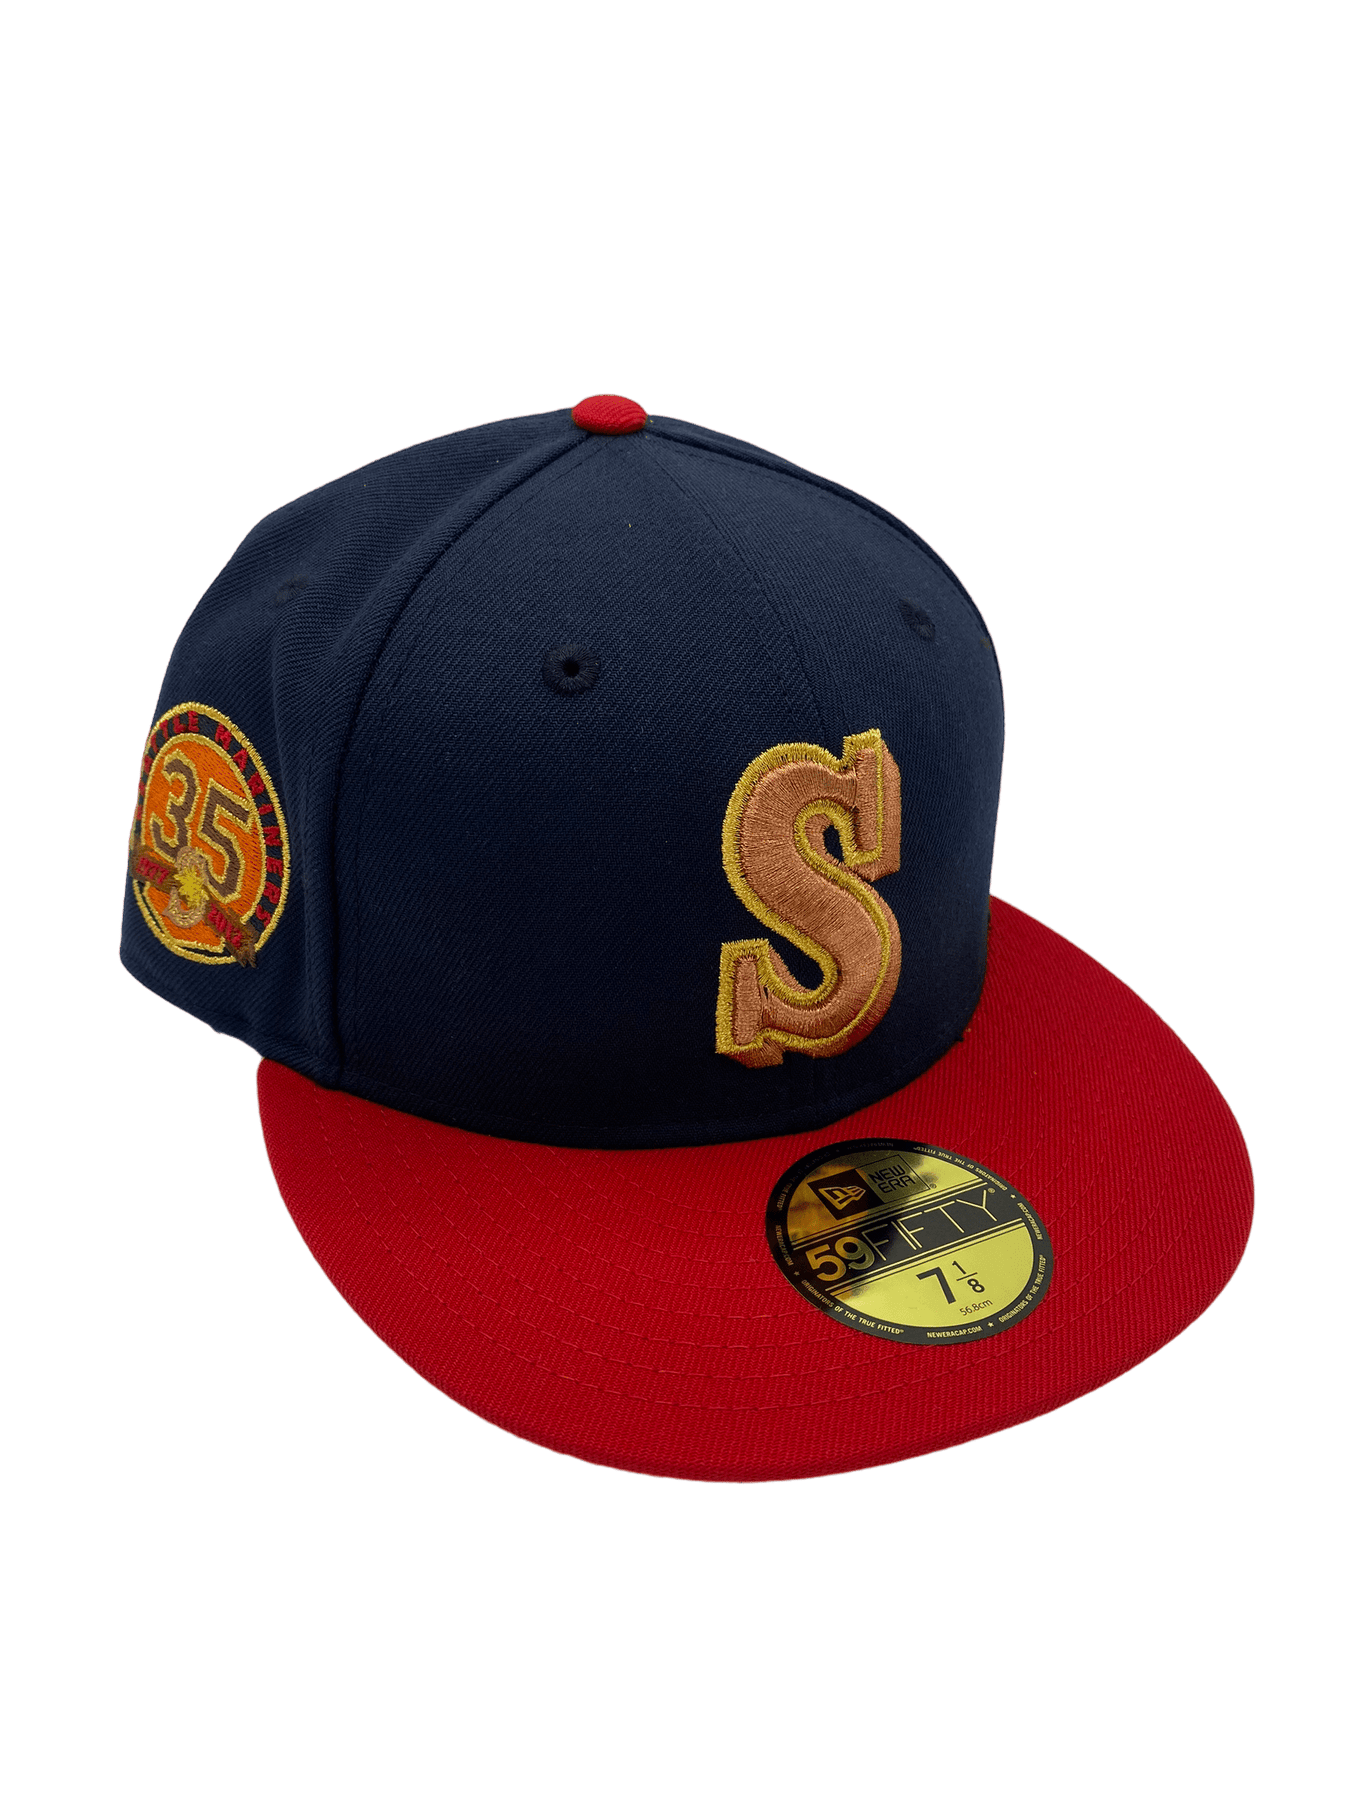 VP 1 Custom Hats